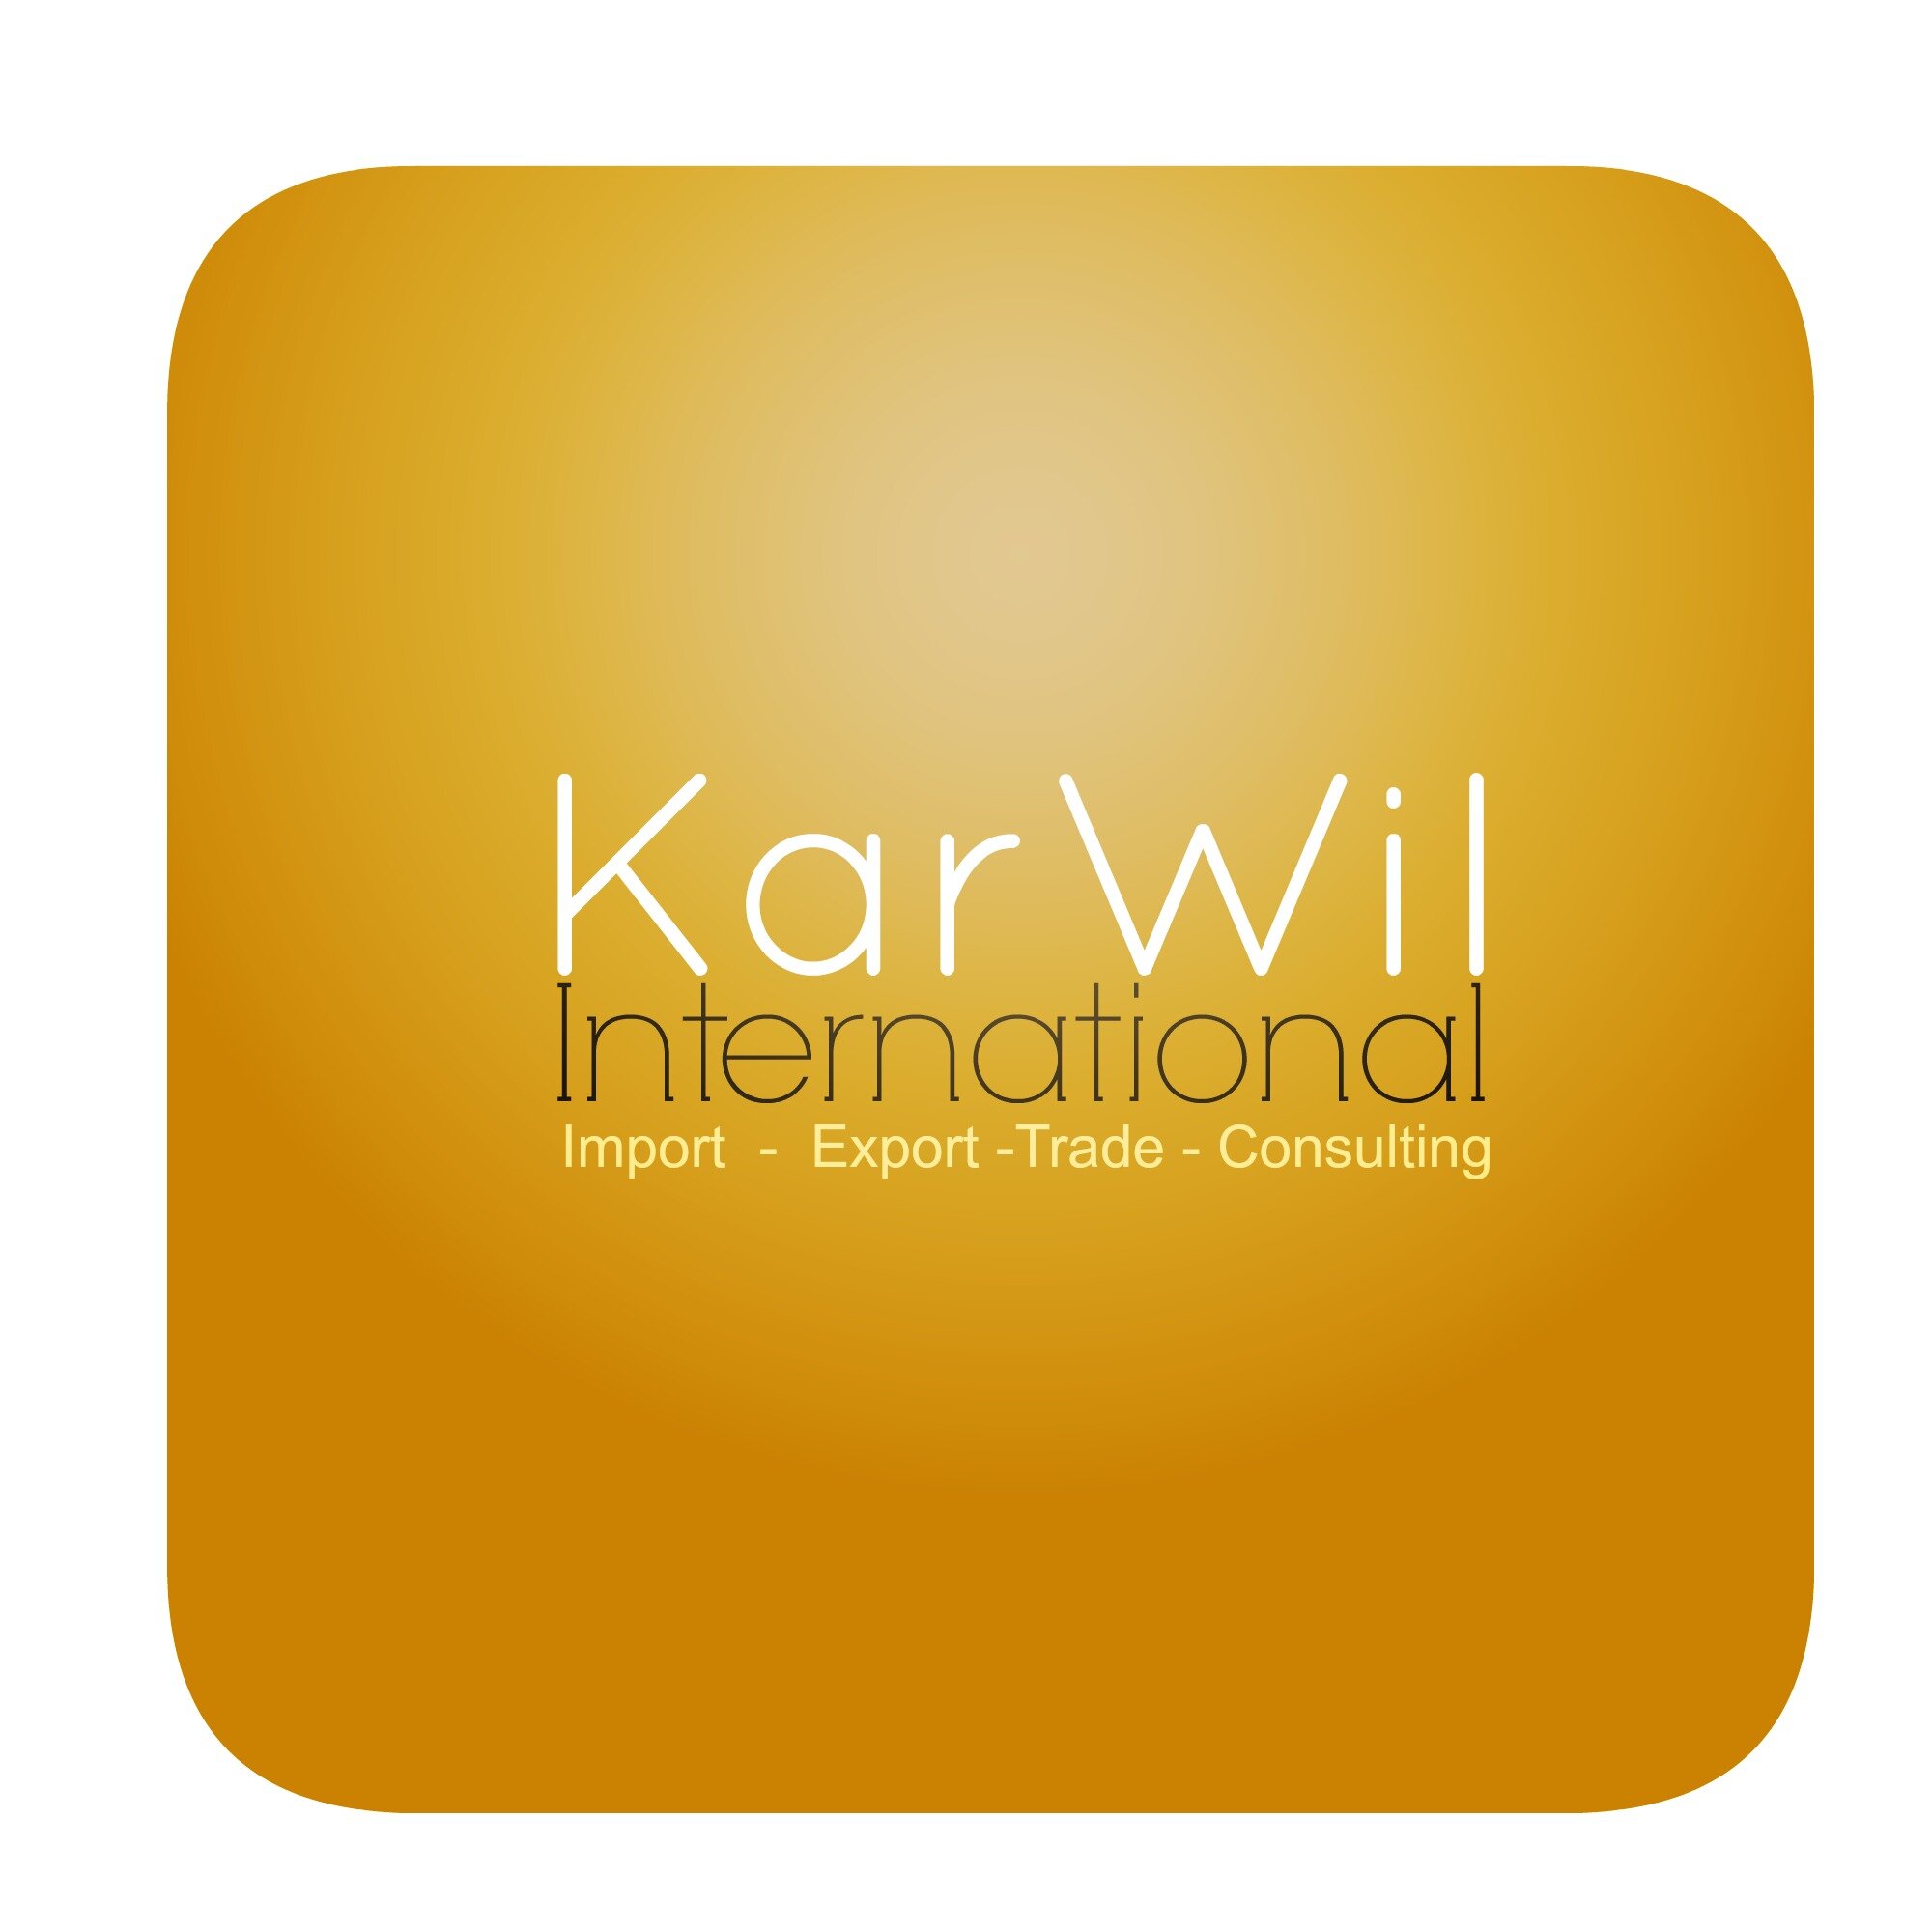 Karwil International